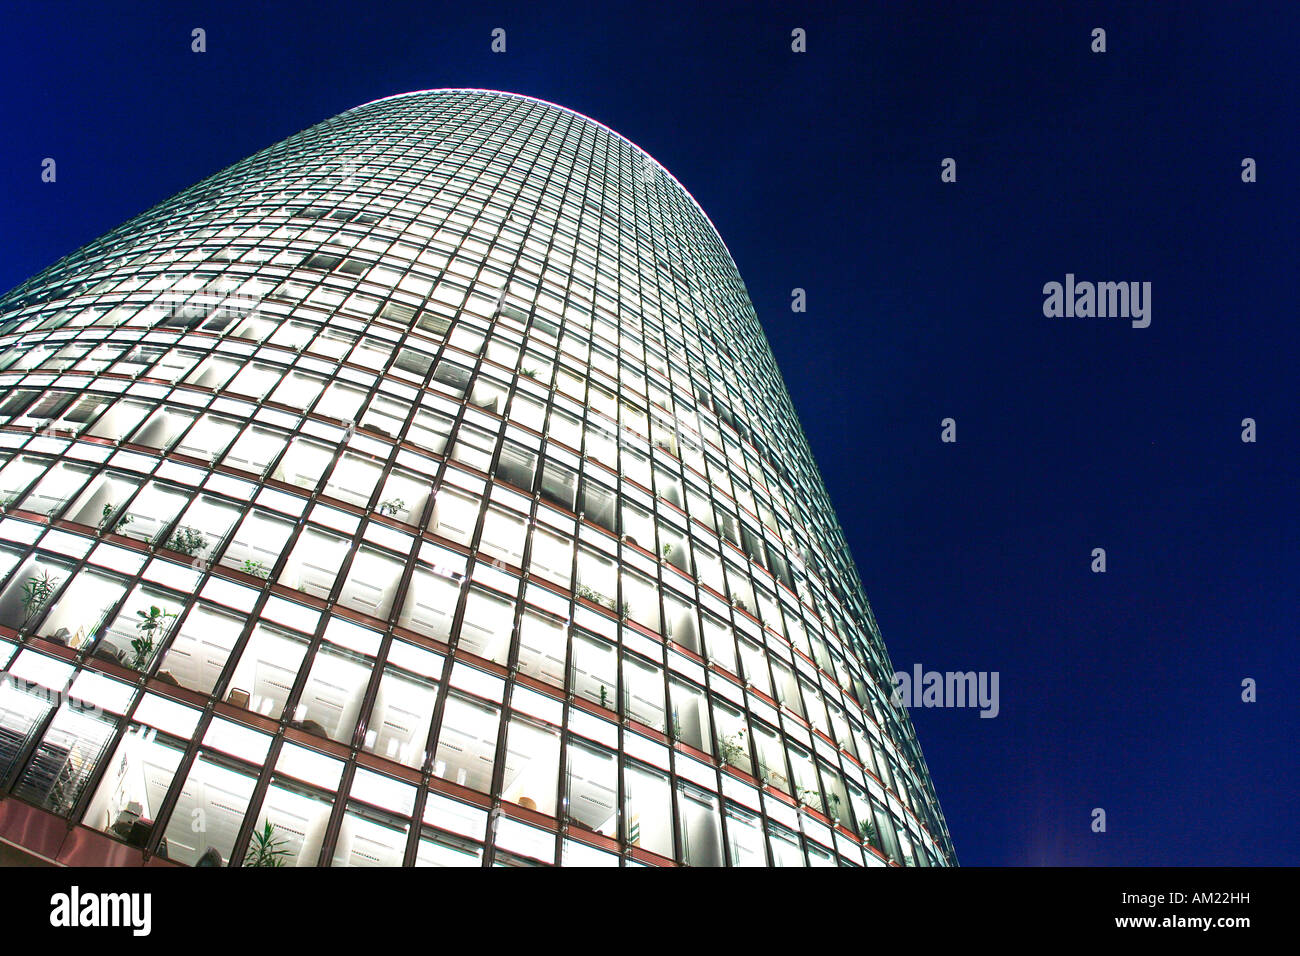 La Potsdamer Platz, la Deutsche Bahn Tower, Berlin, Allemagne Banque D'Images